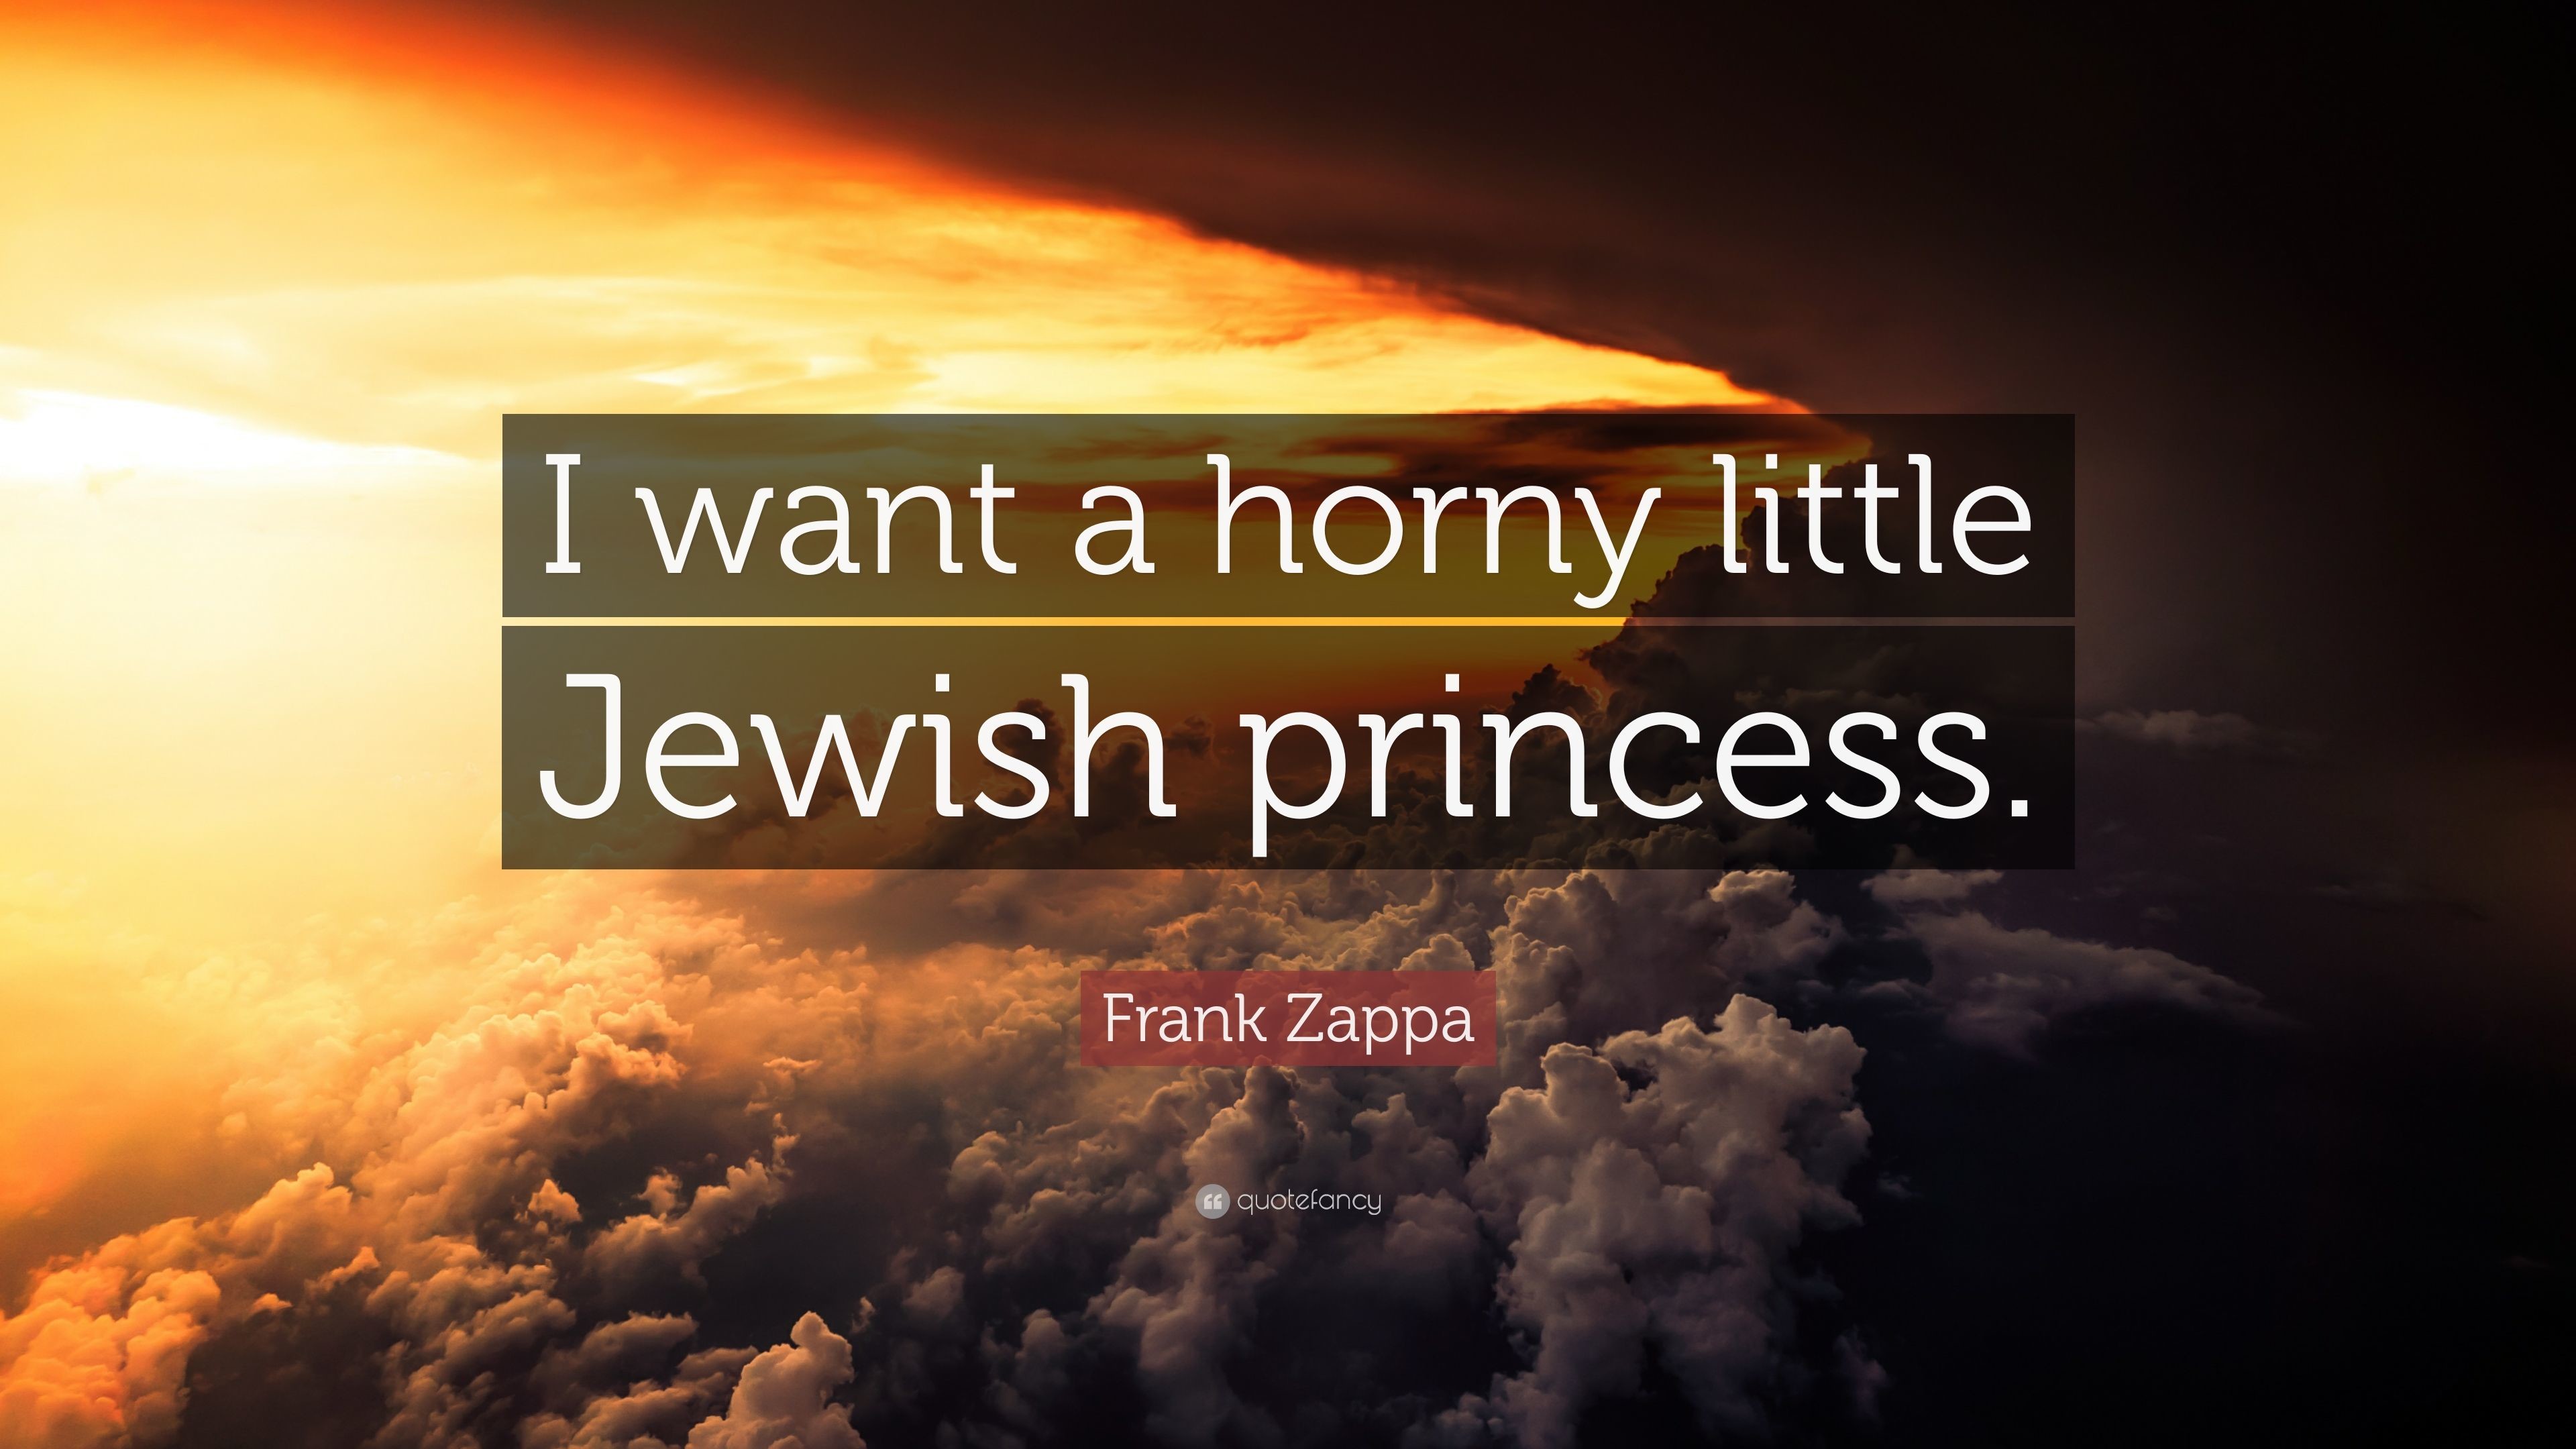 3840x2160 Frank Zappa Quote: “I want a horny little Jewish princess.”